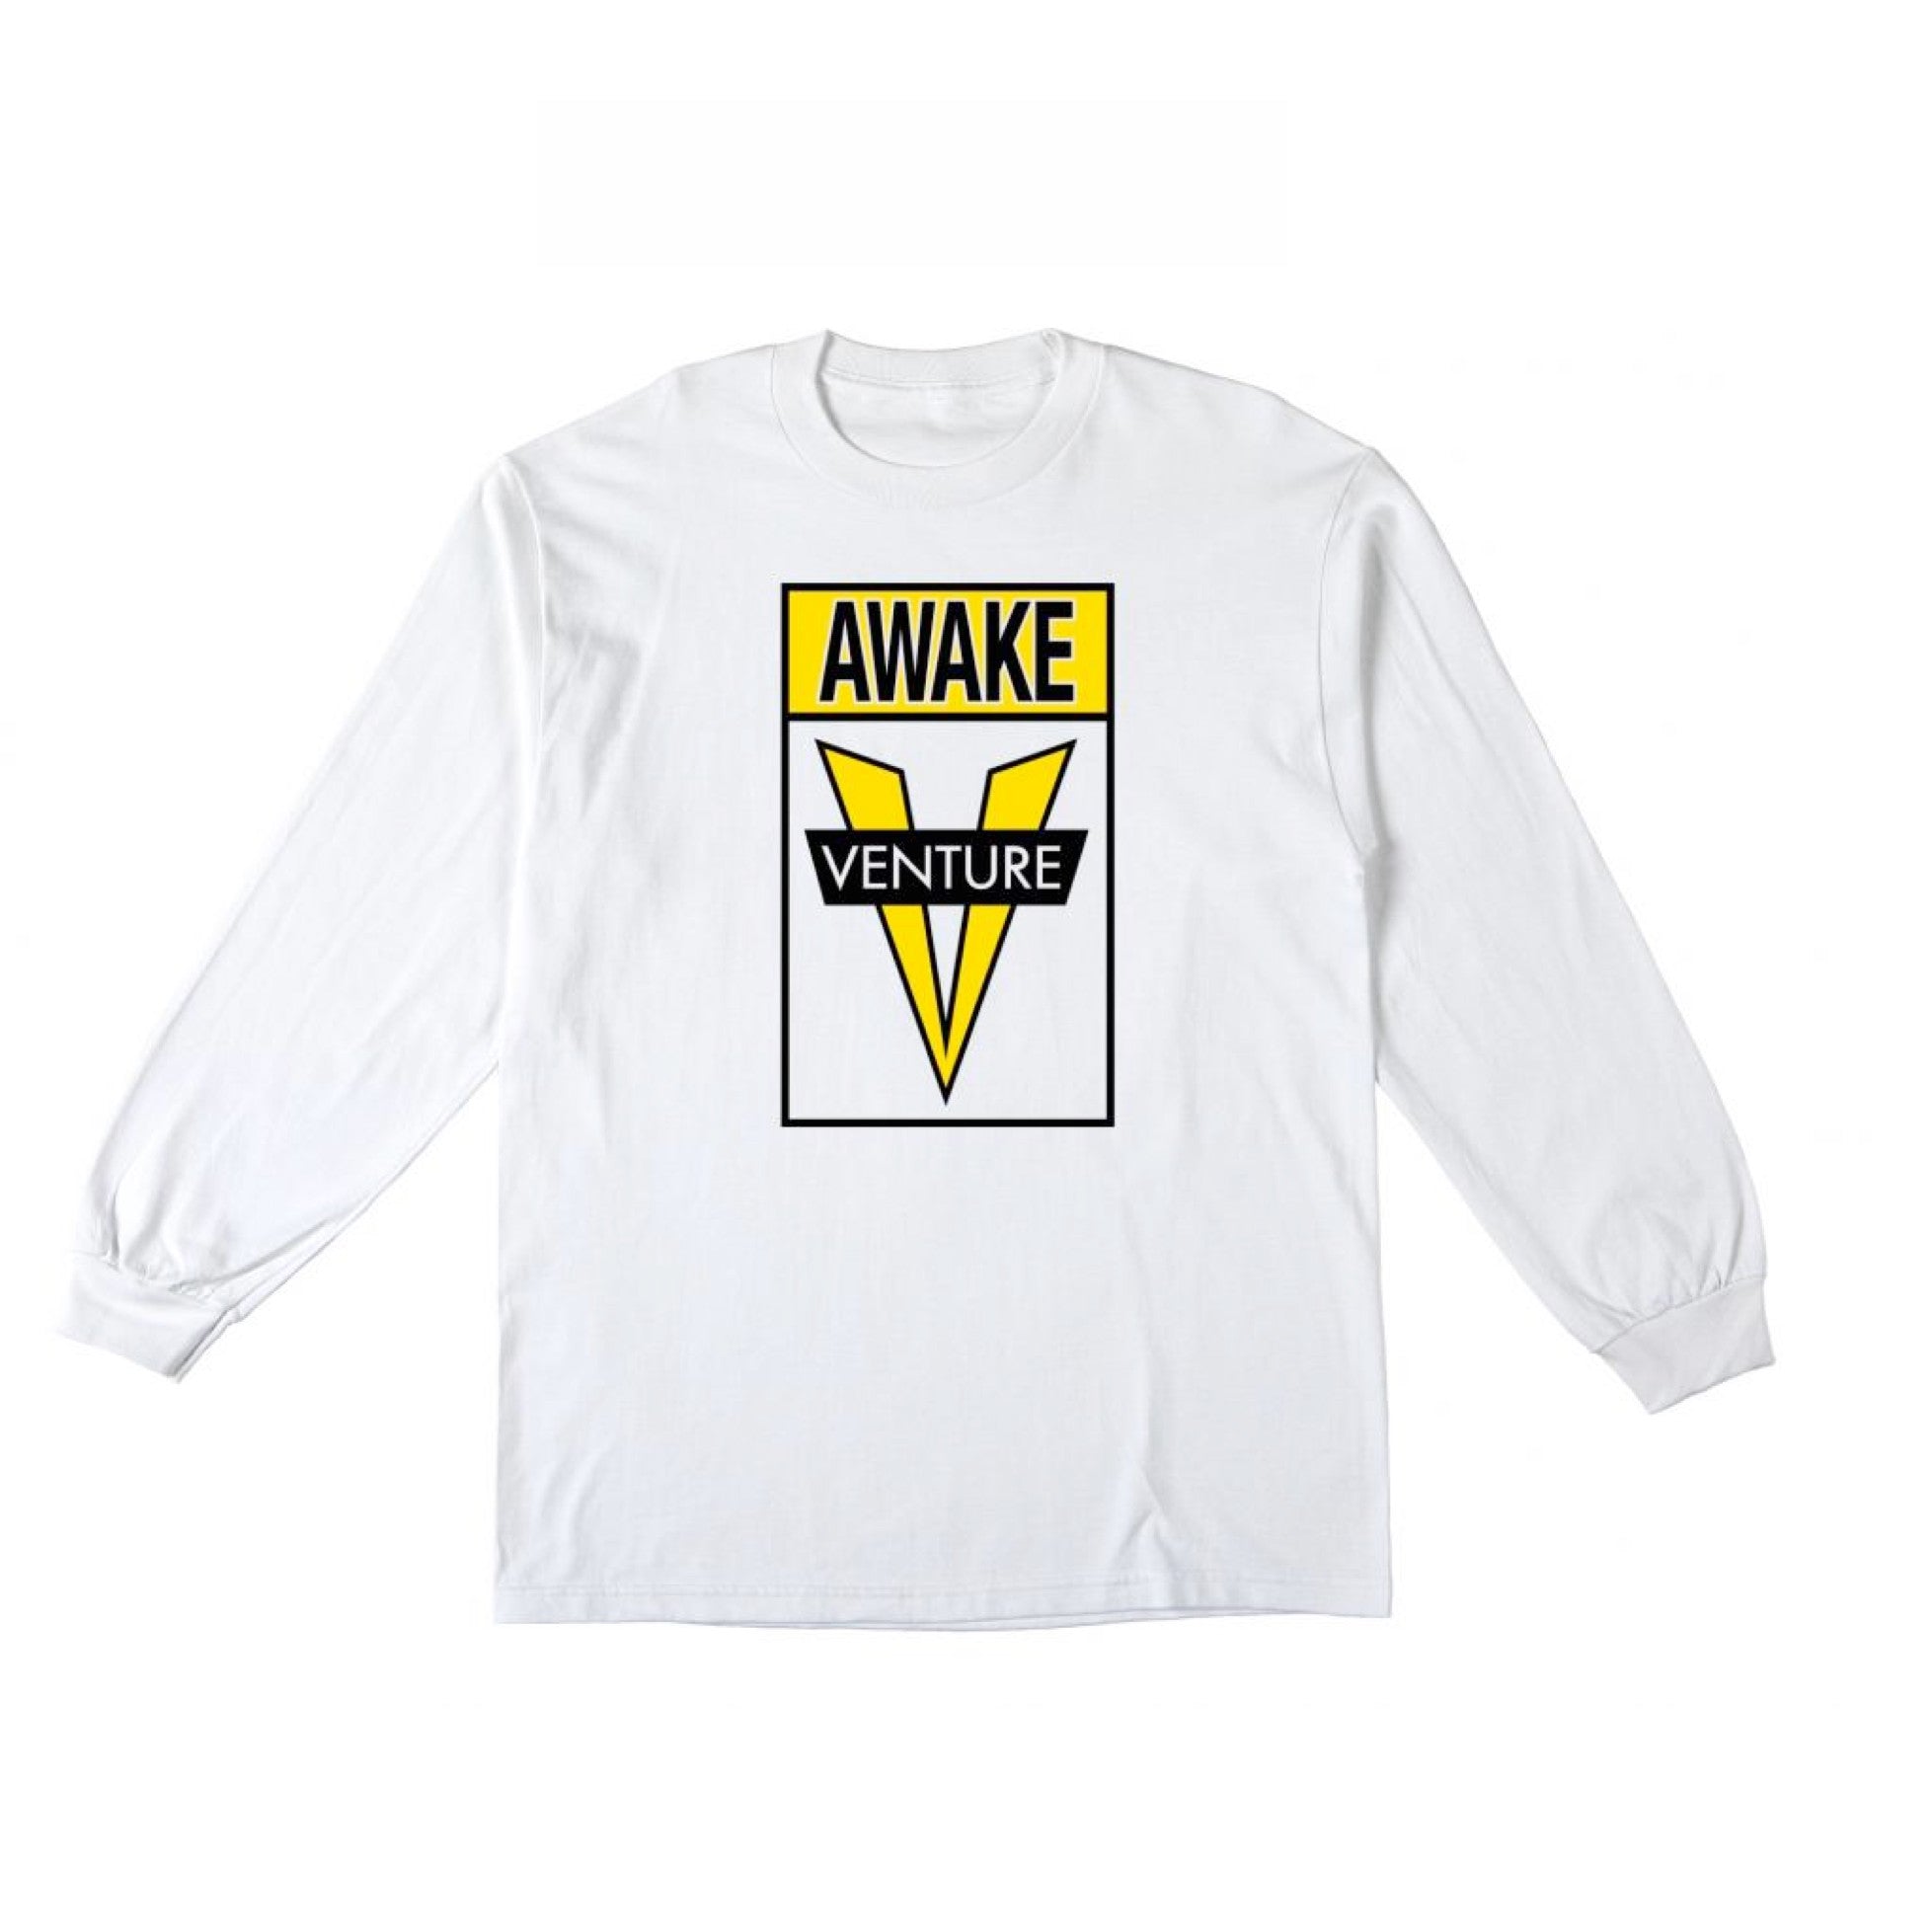 Venture L/S T Shirt Awake White/Yellow & Black